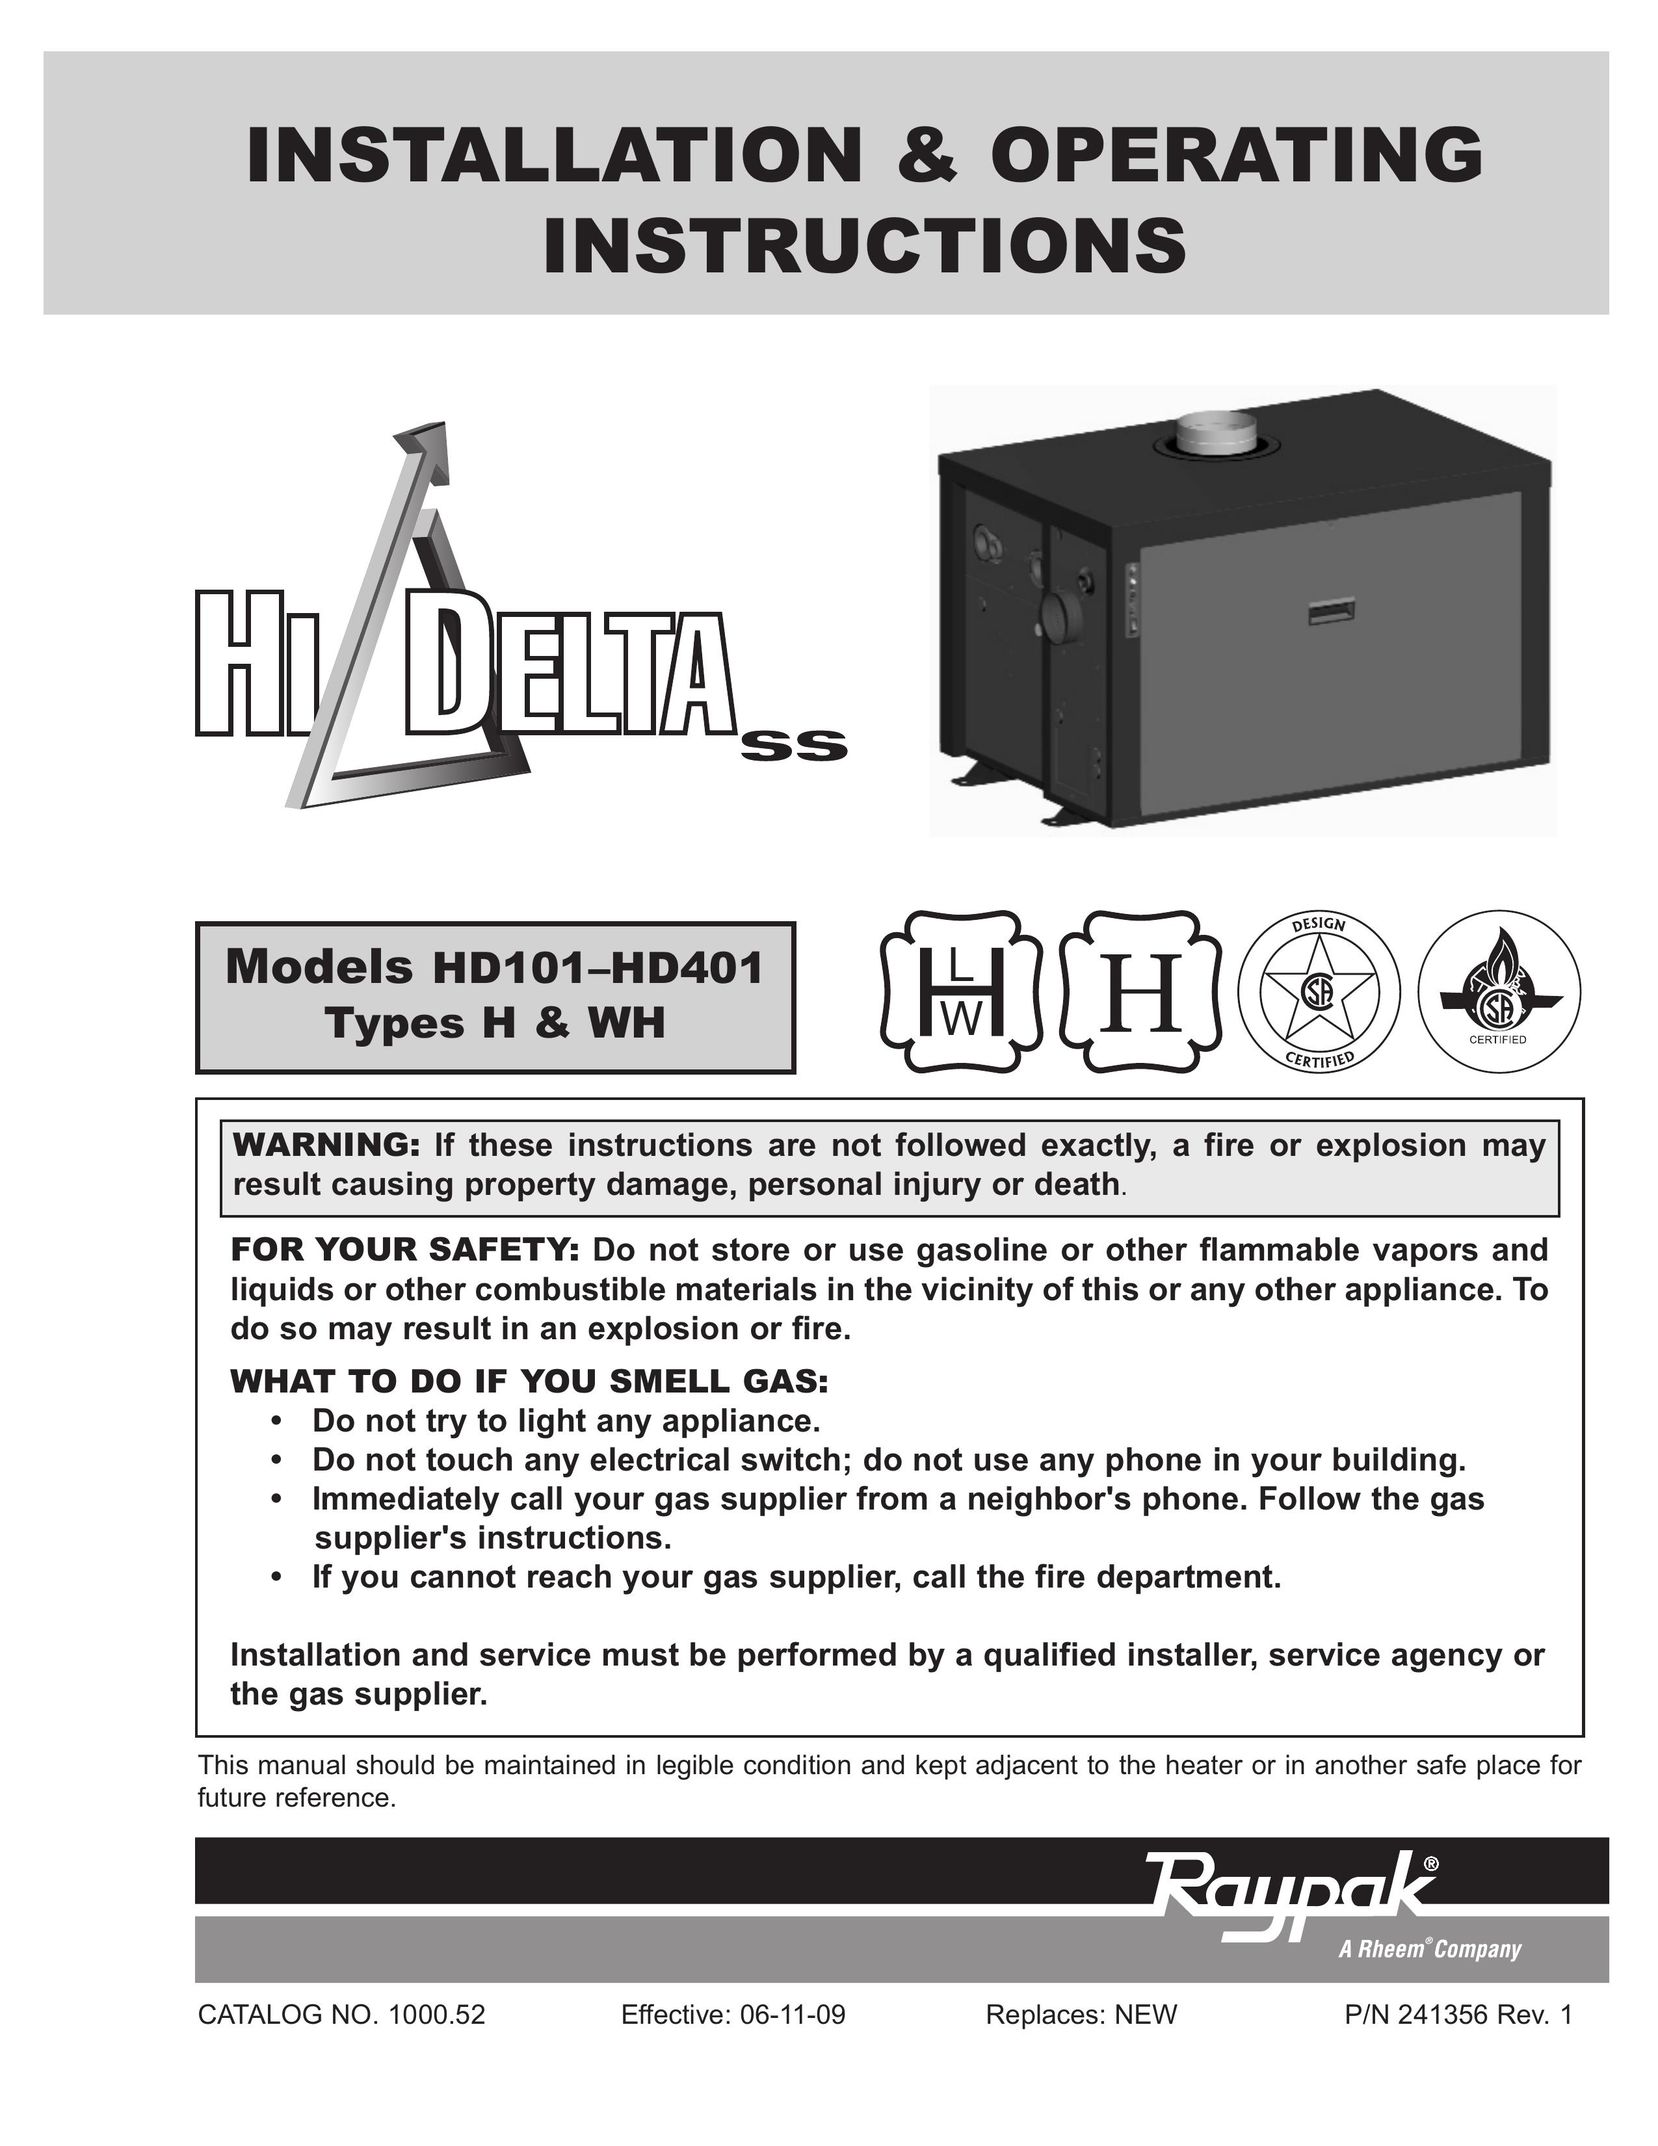 Raypak HD401 Water Heater User Manual